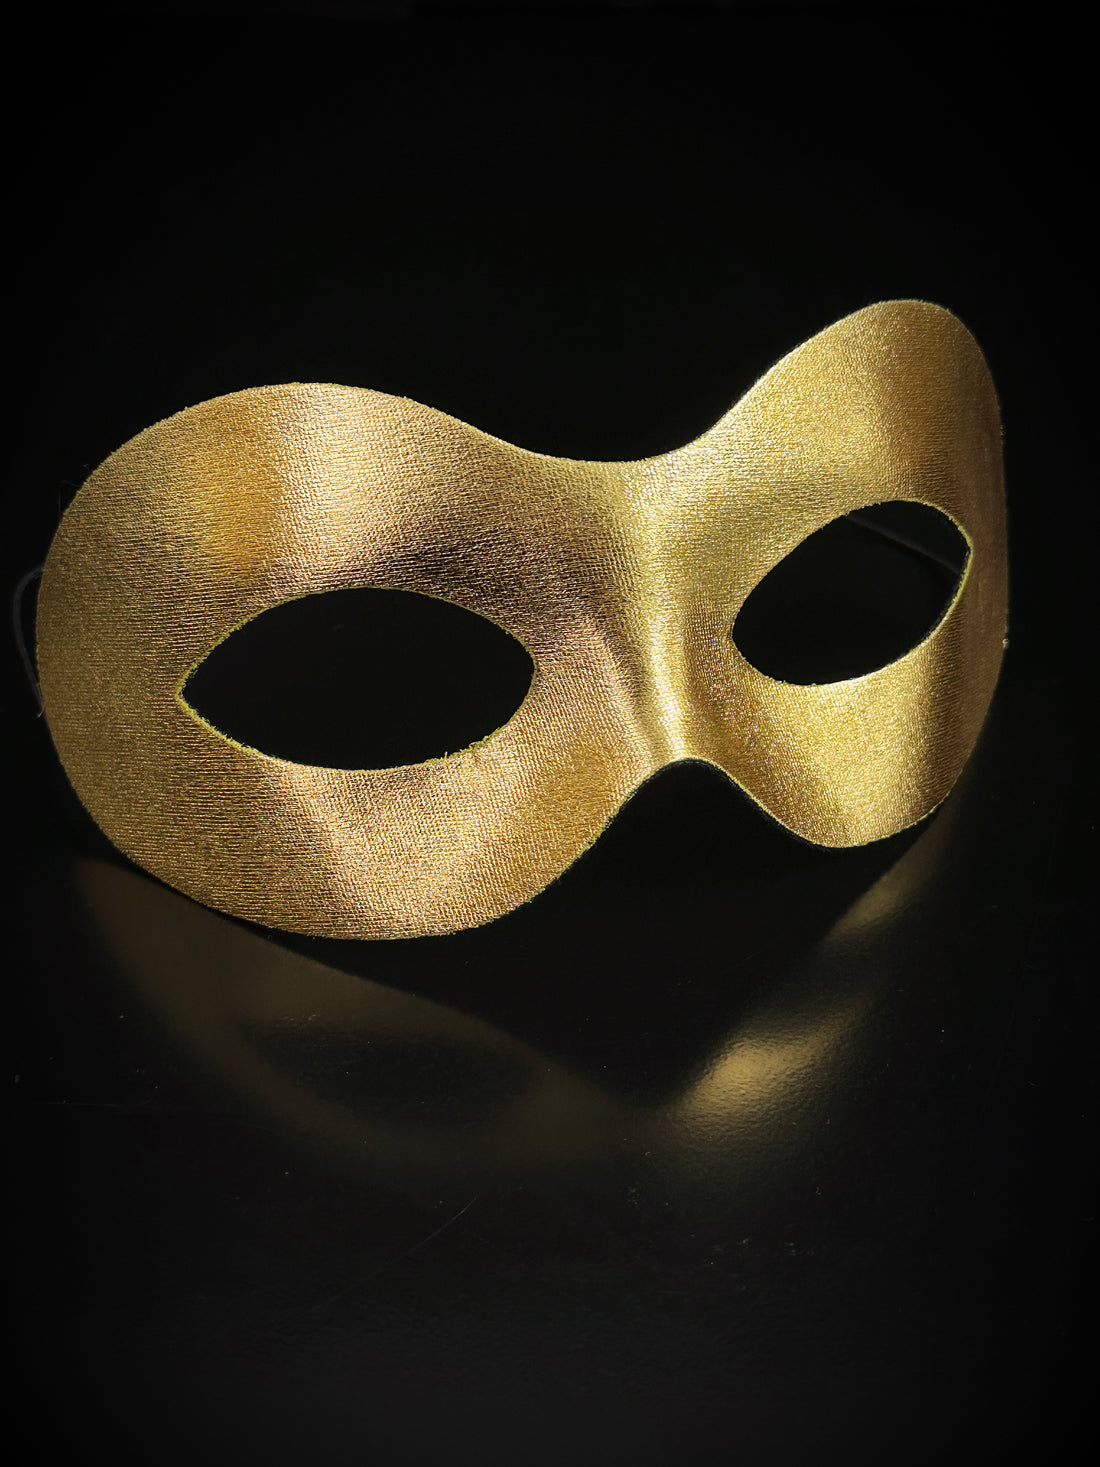 Bulk masquerade mask in gold.